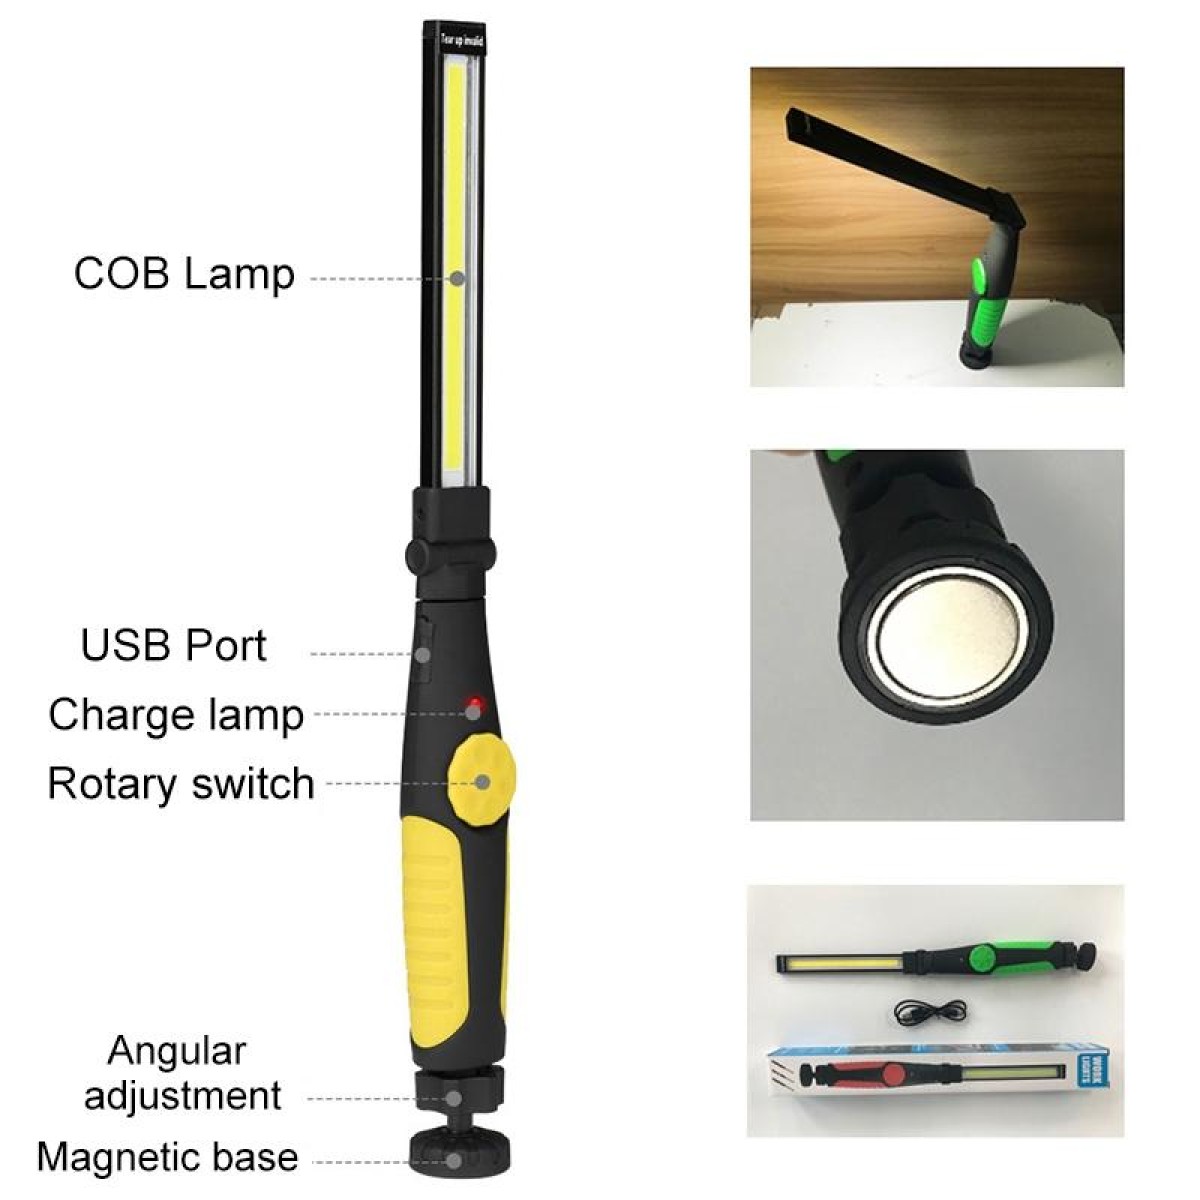 Car Home Car Work Maintenance Lamp Inspection Maintenance Light Emergency COB Charging Lamp(Yellow)